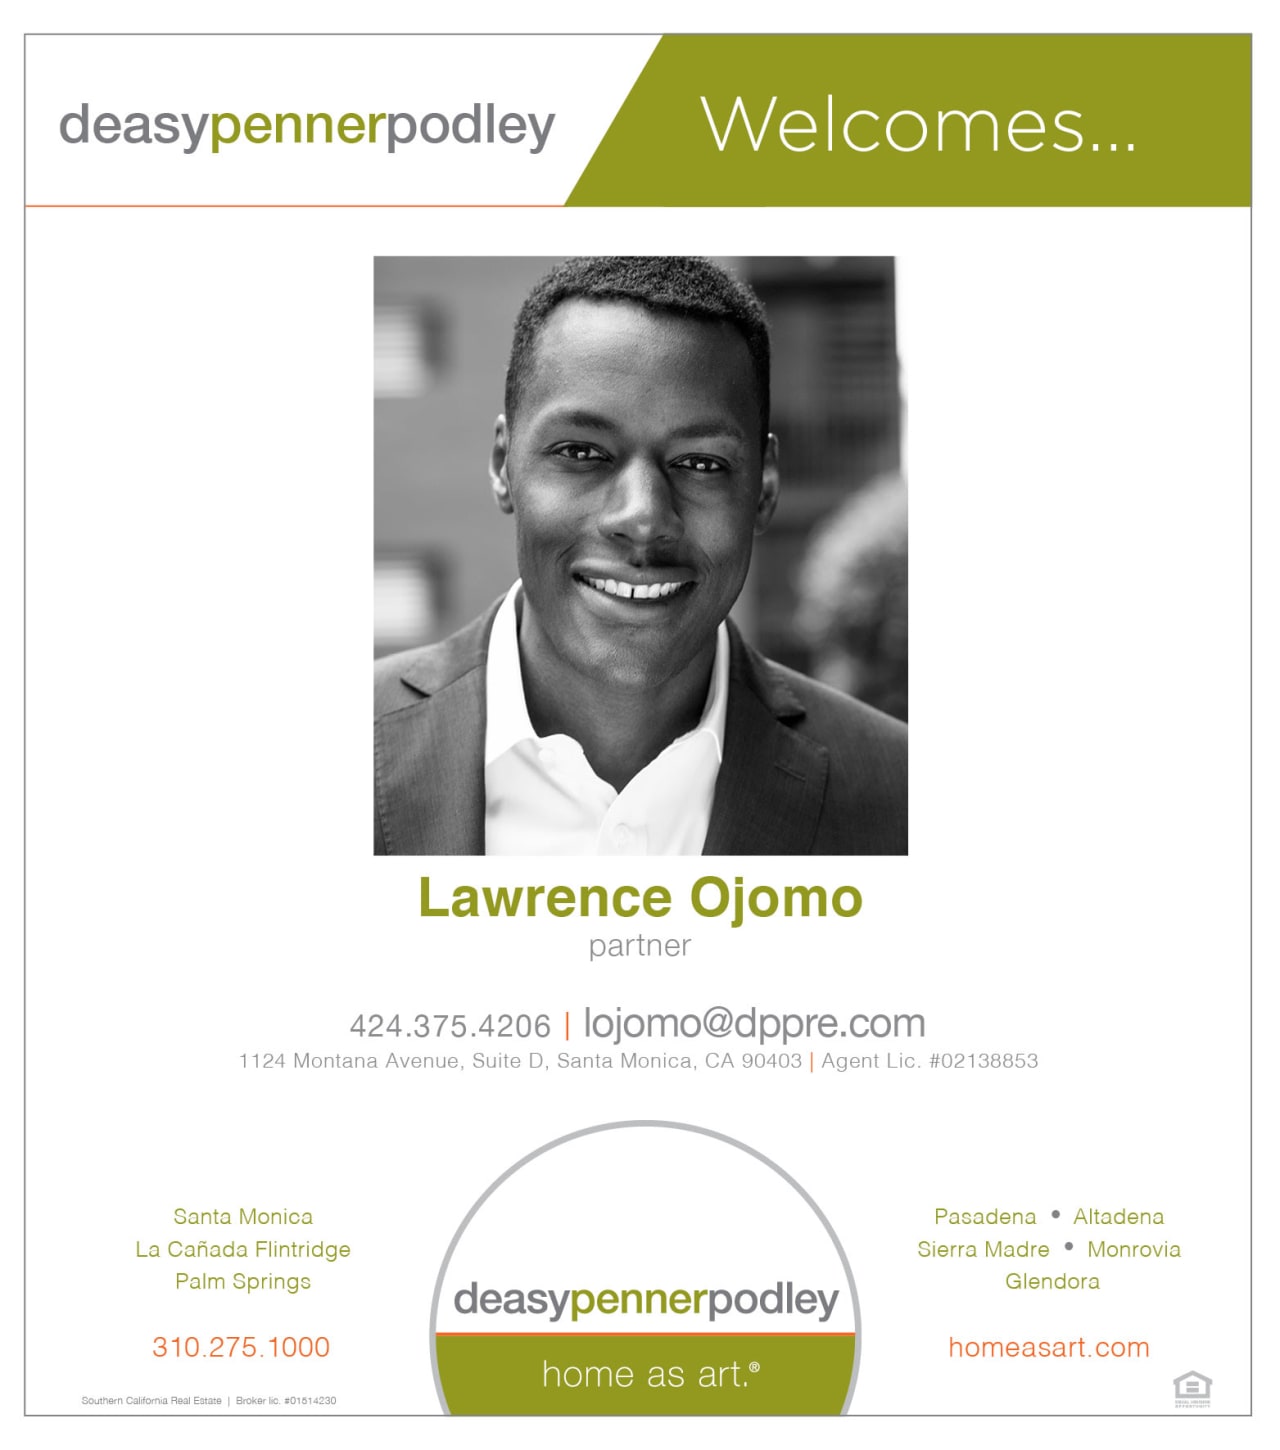 DPP Real Estate Welcomes Lawrence Ojomo